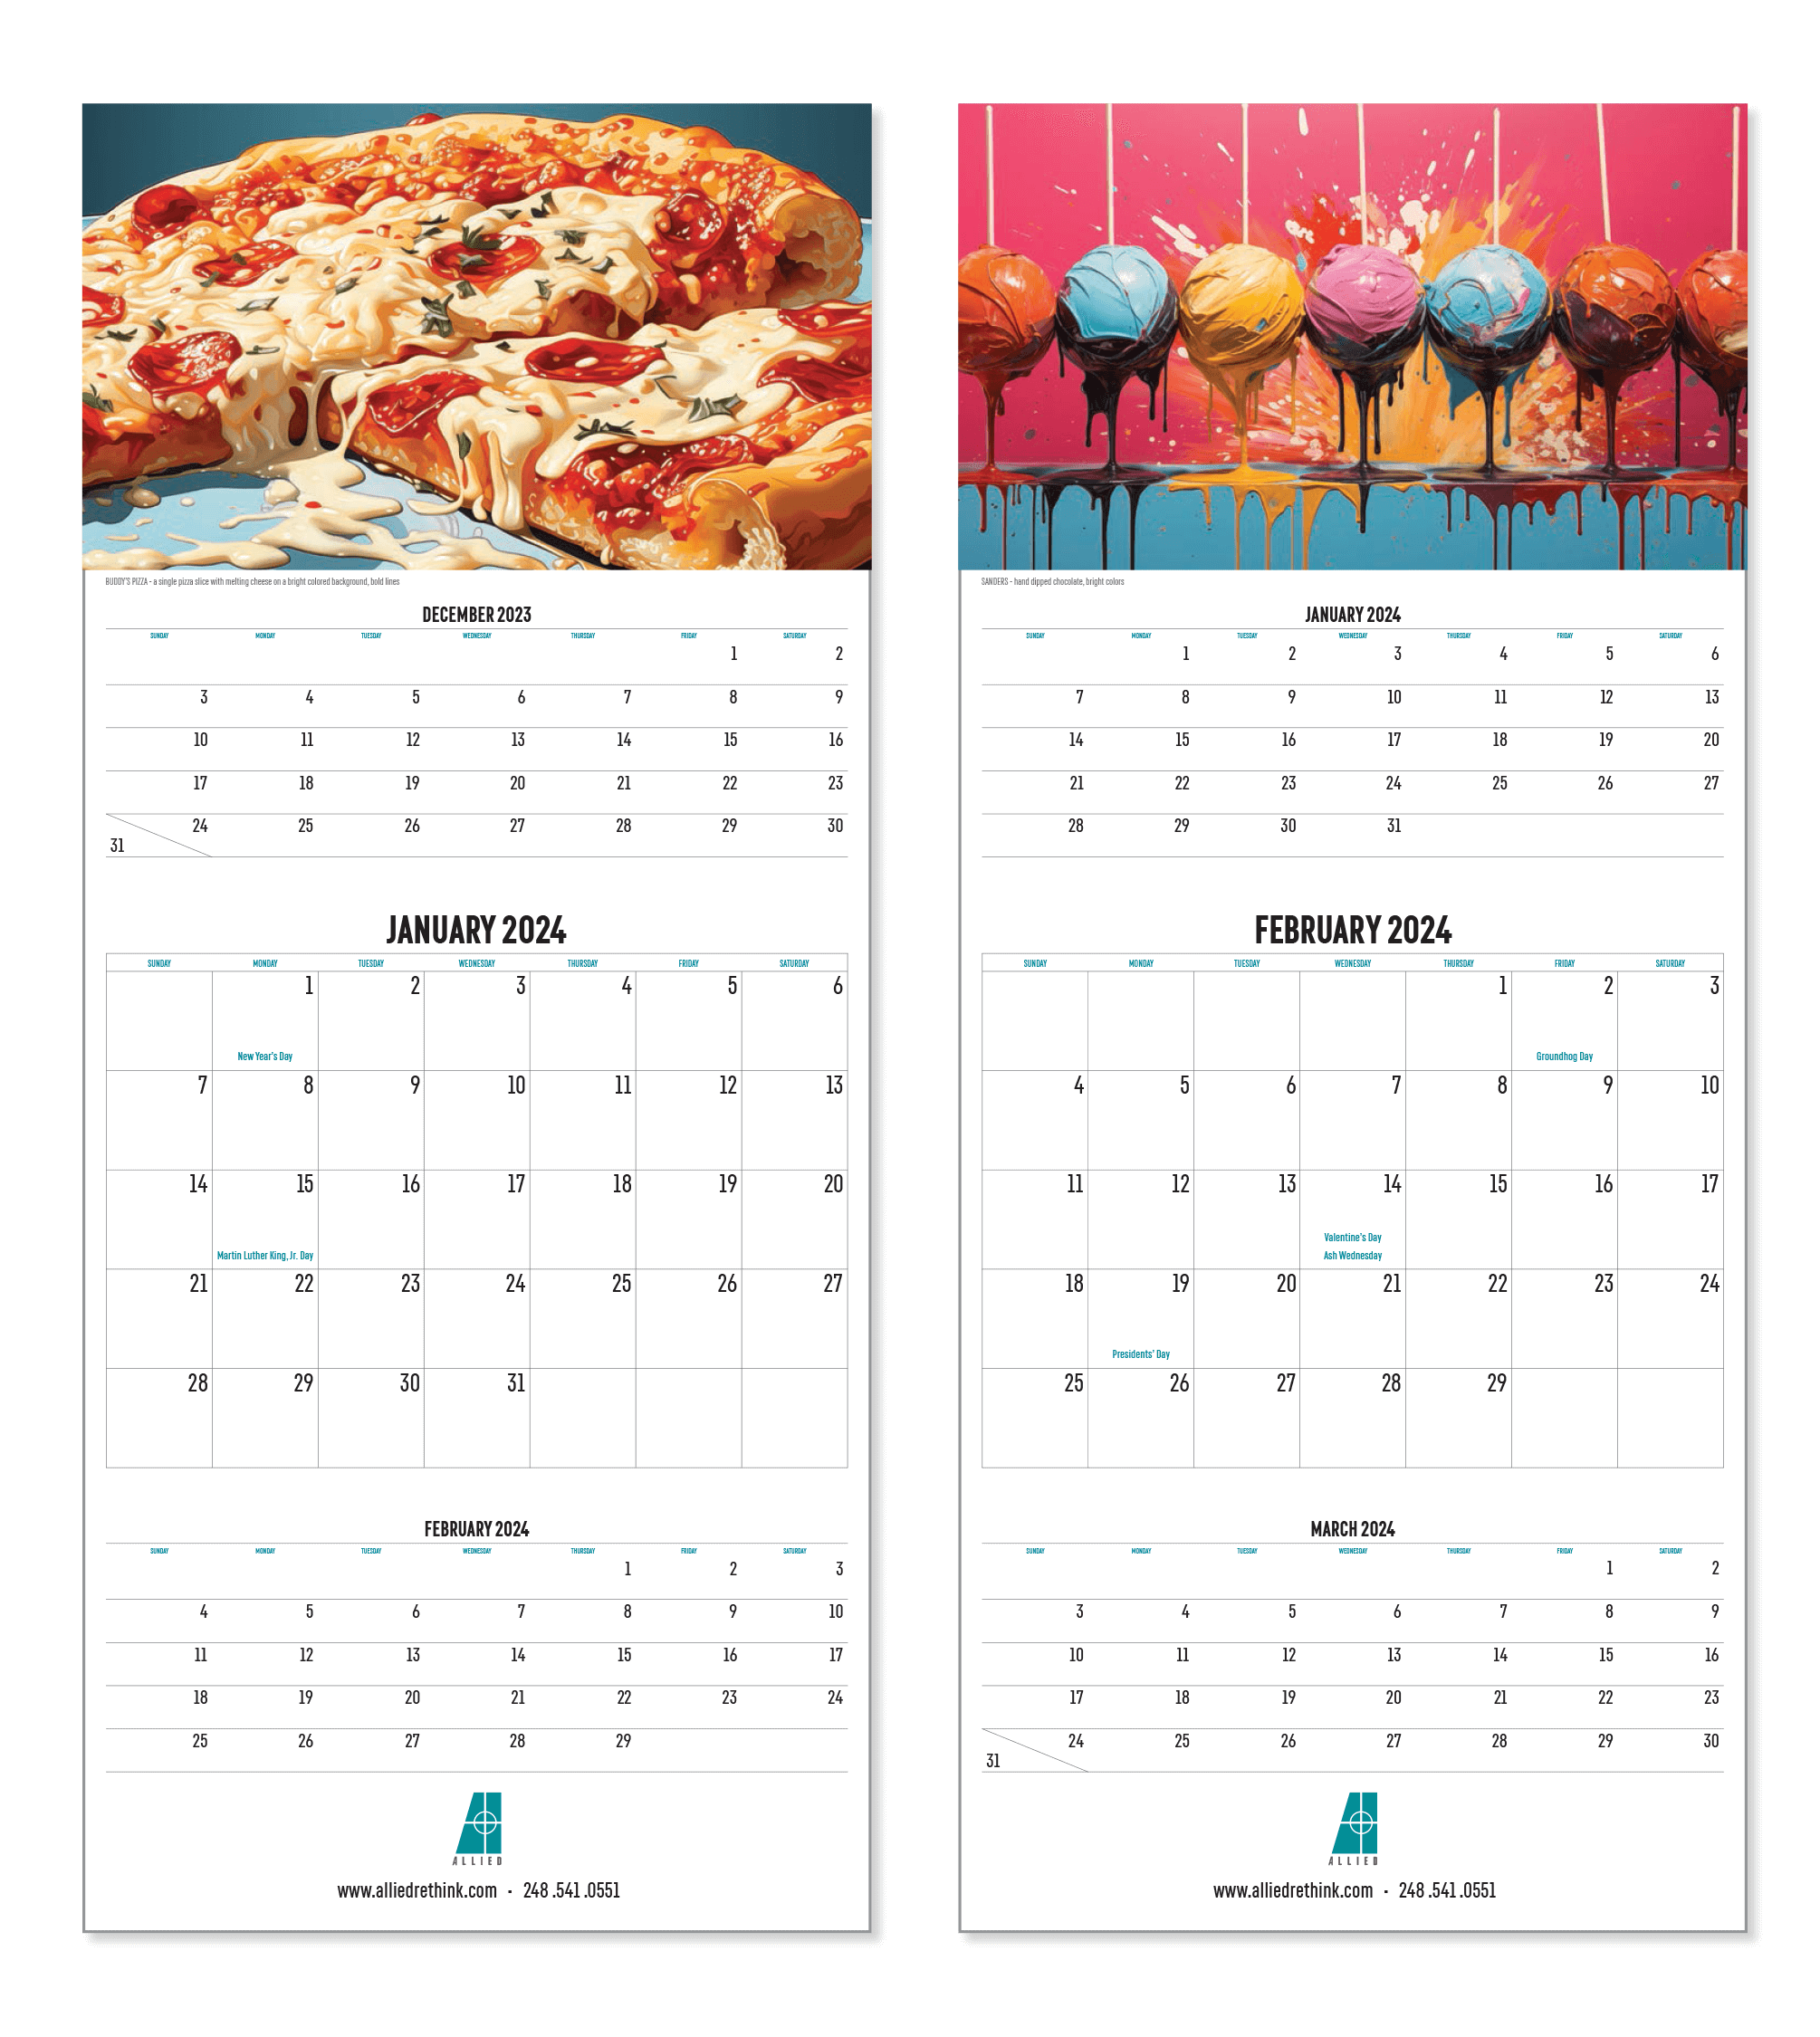 Allied calendar AI Pizza and chocolates